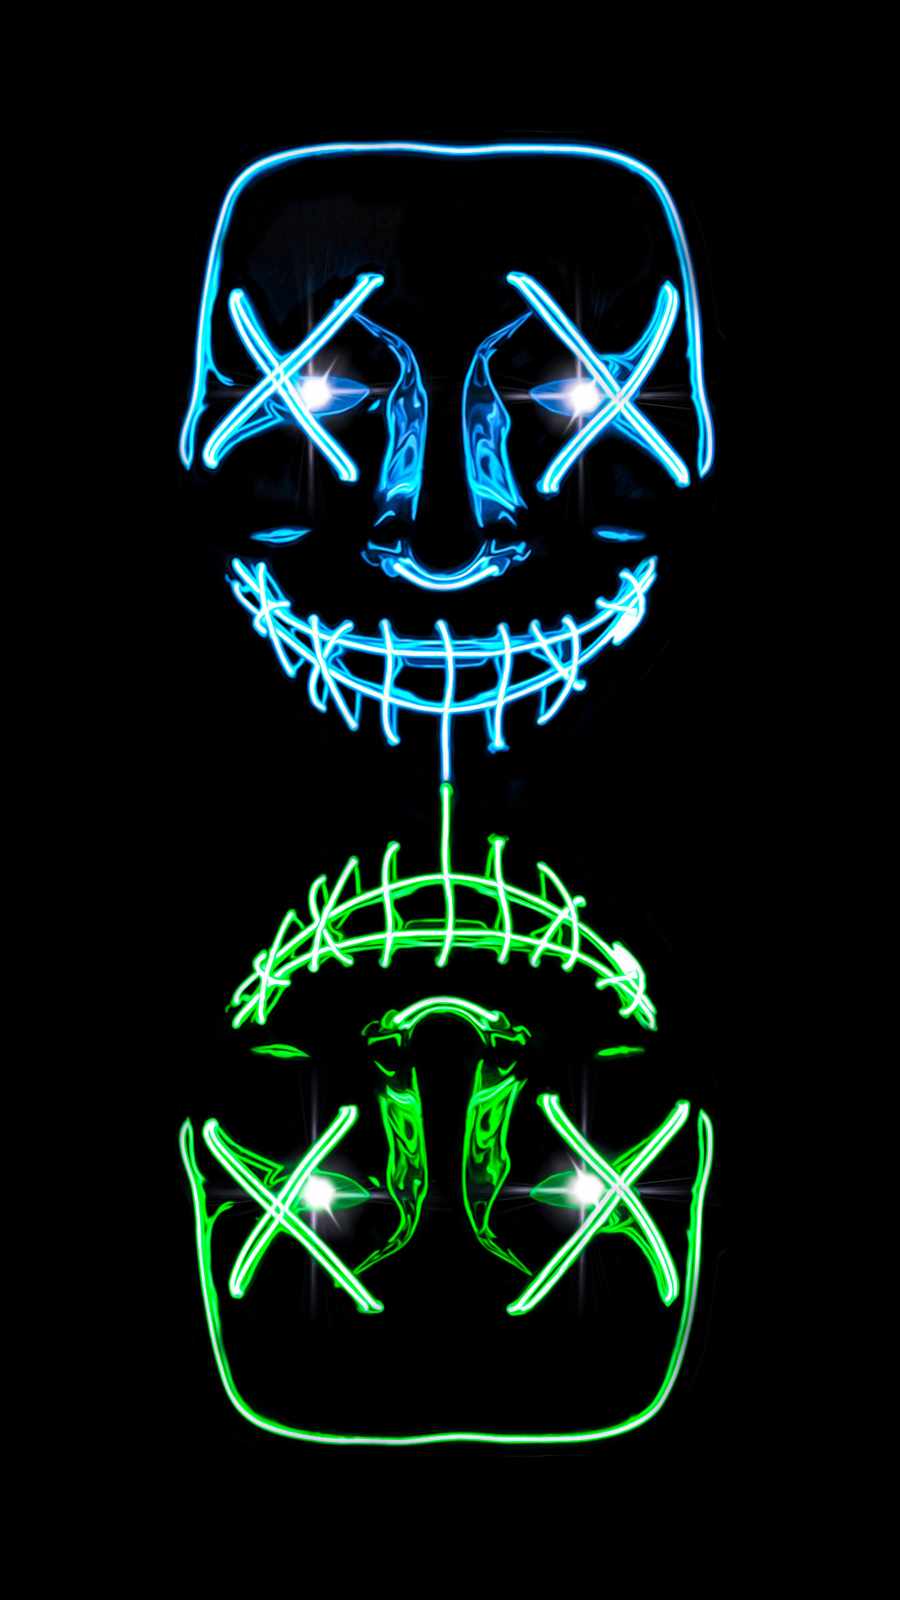 Neon Masks iPhone Wallpaper